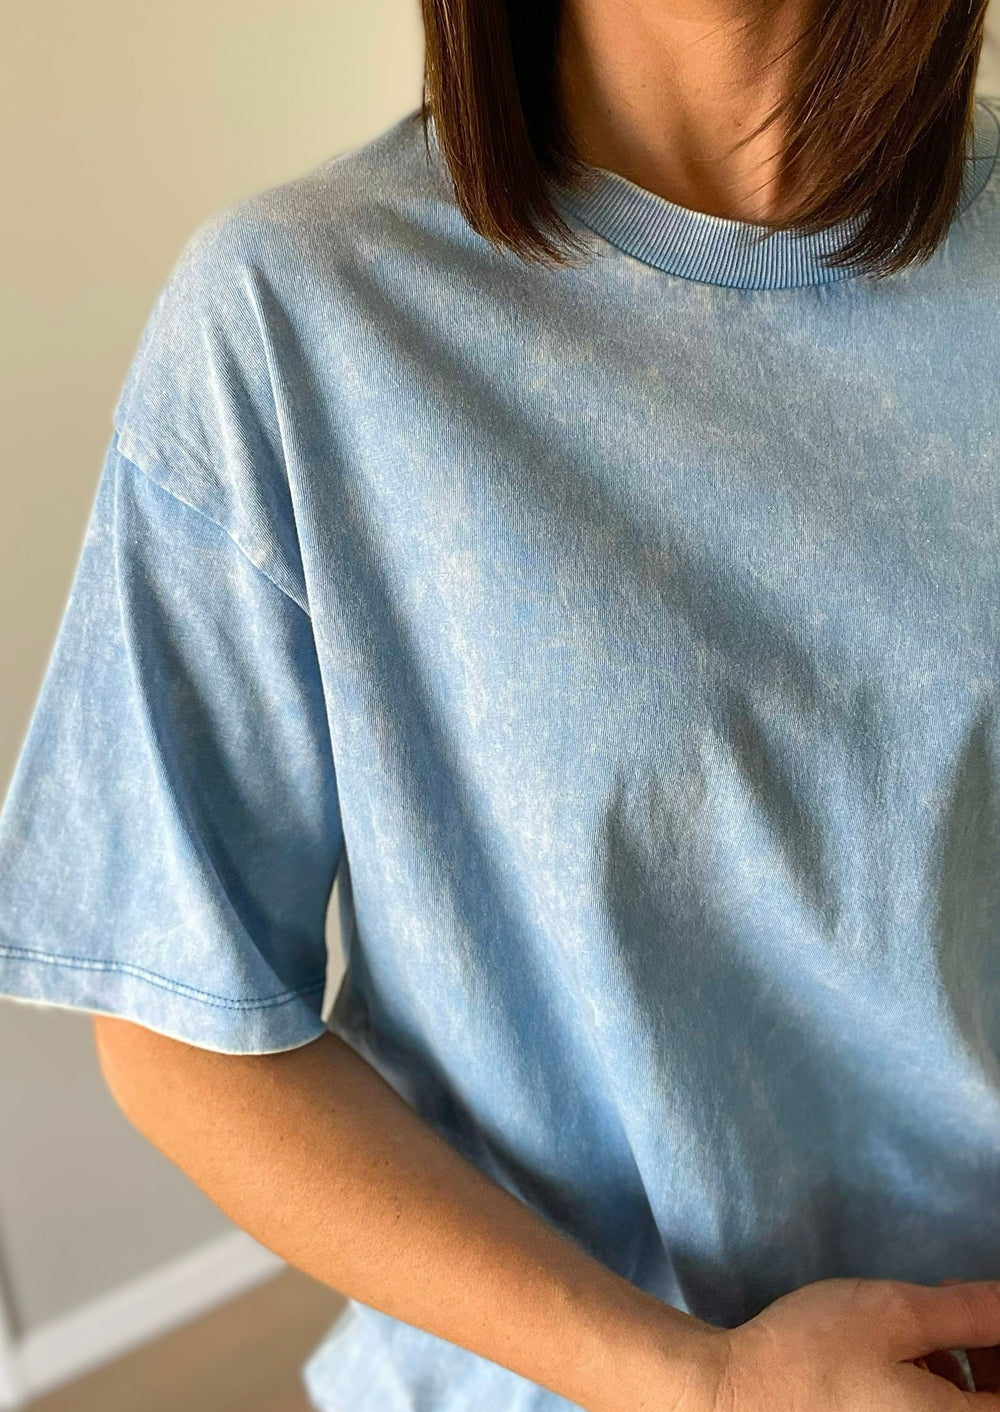 Women's Washed Sky Blue Short Sleeve T-Shirt Top